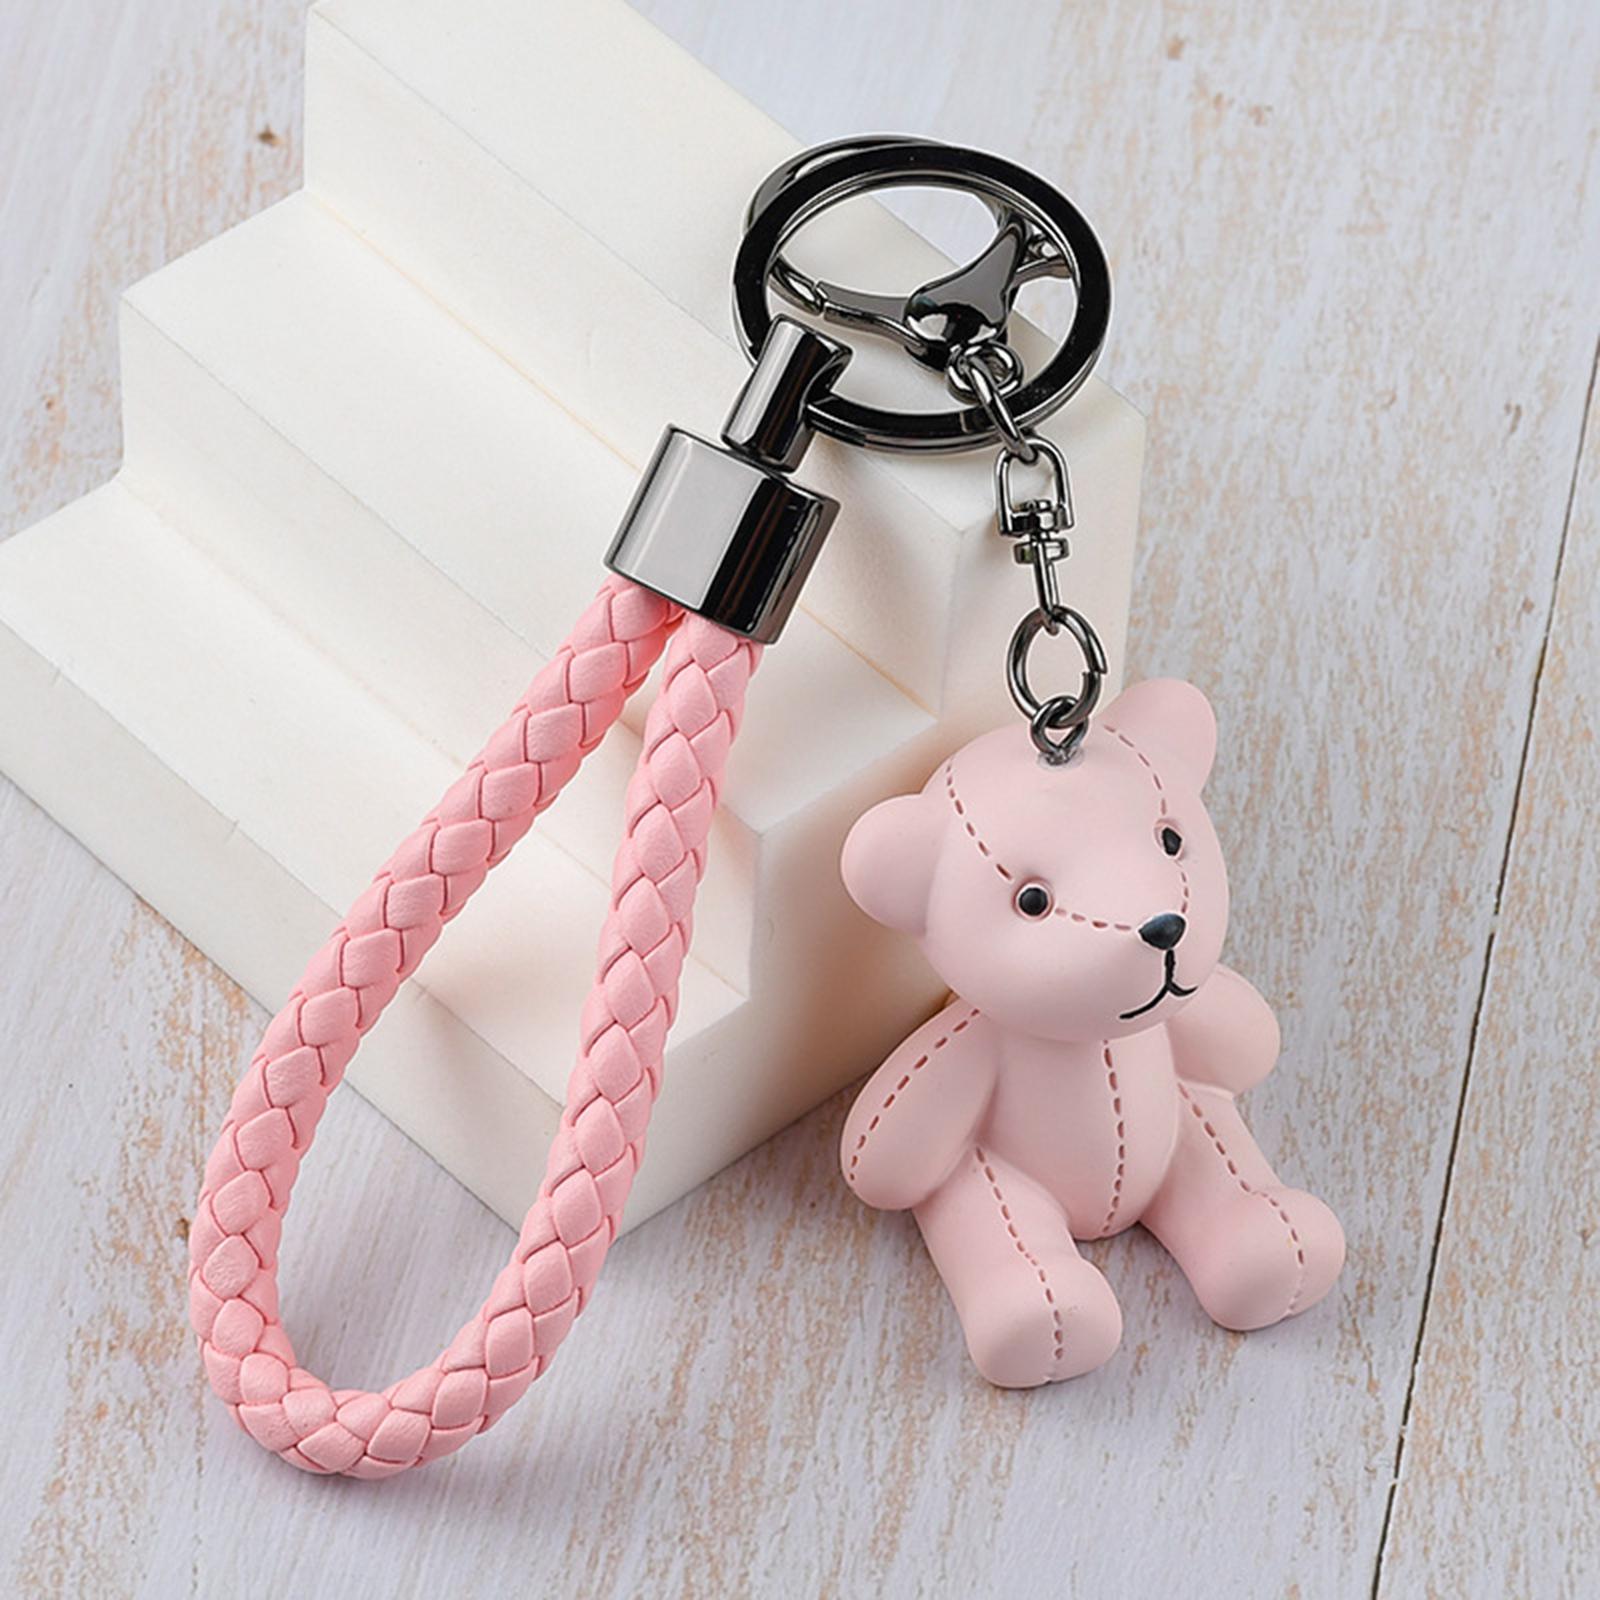 Bear Key Chain Pendant Resin Animal Pendant Creative Gift Car Bag Keychain Pink